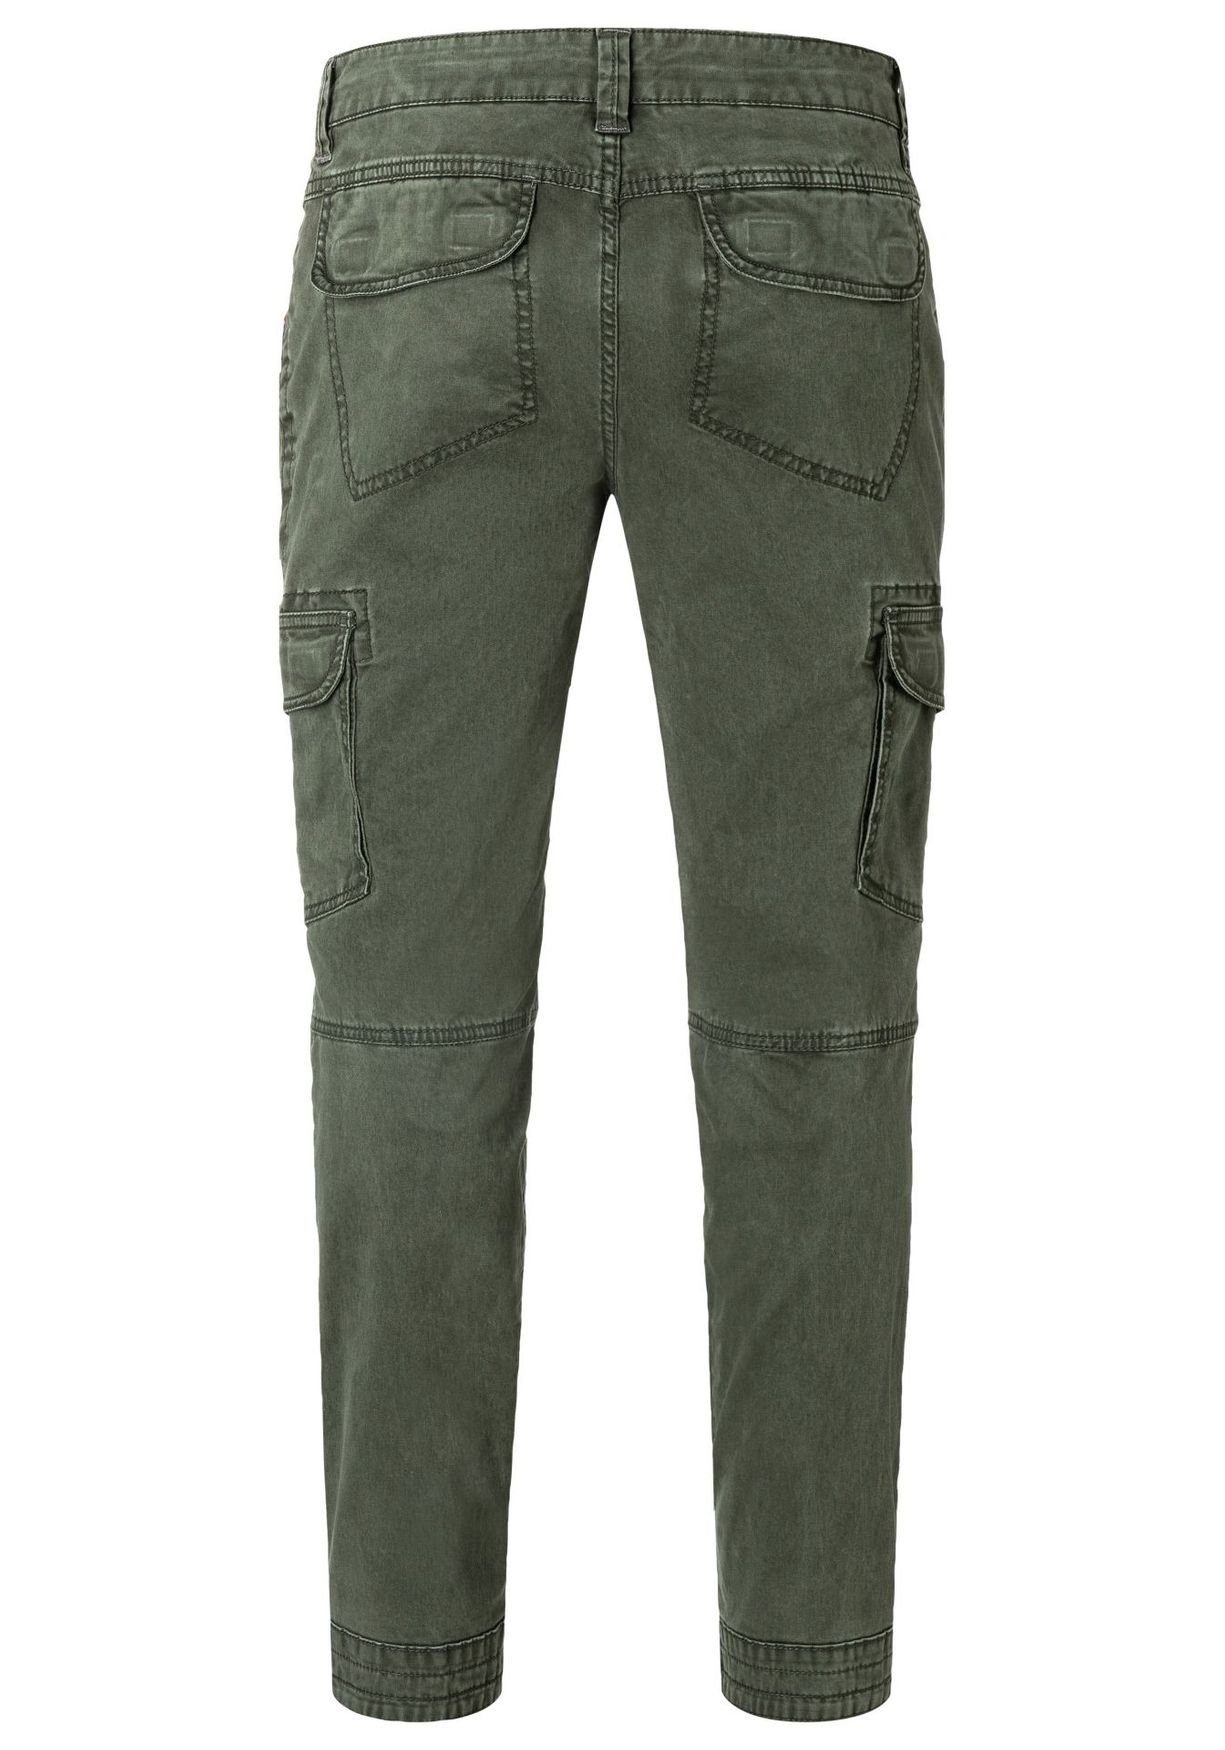 Denim TIMEZONE Olive Regular Hose 5180 Cargohose BenTZ Jeans in Stretch Fit Regular Cargo